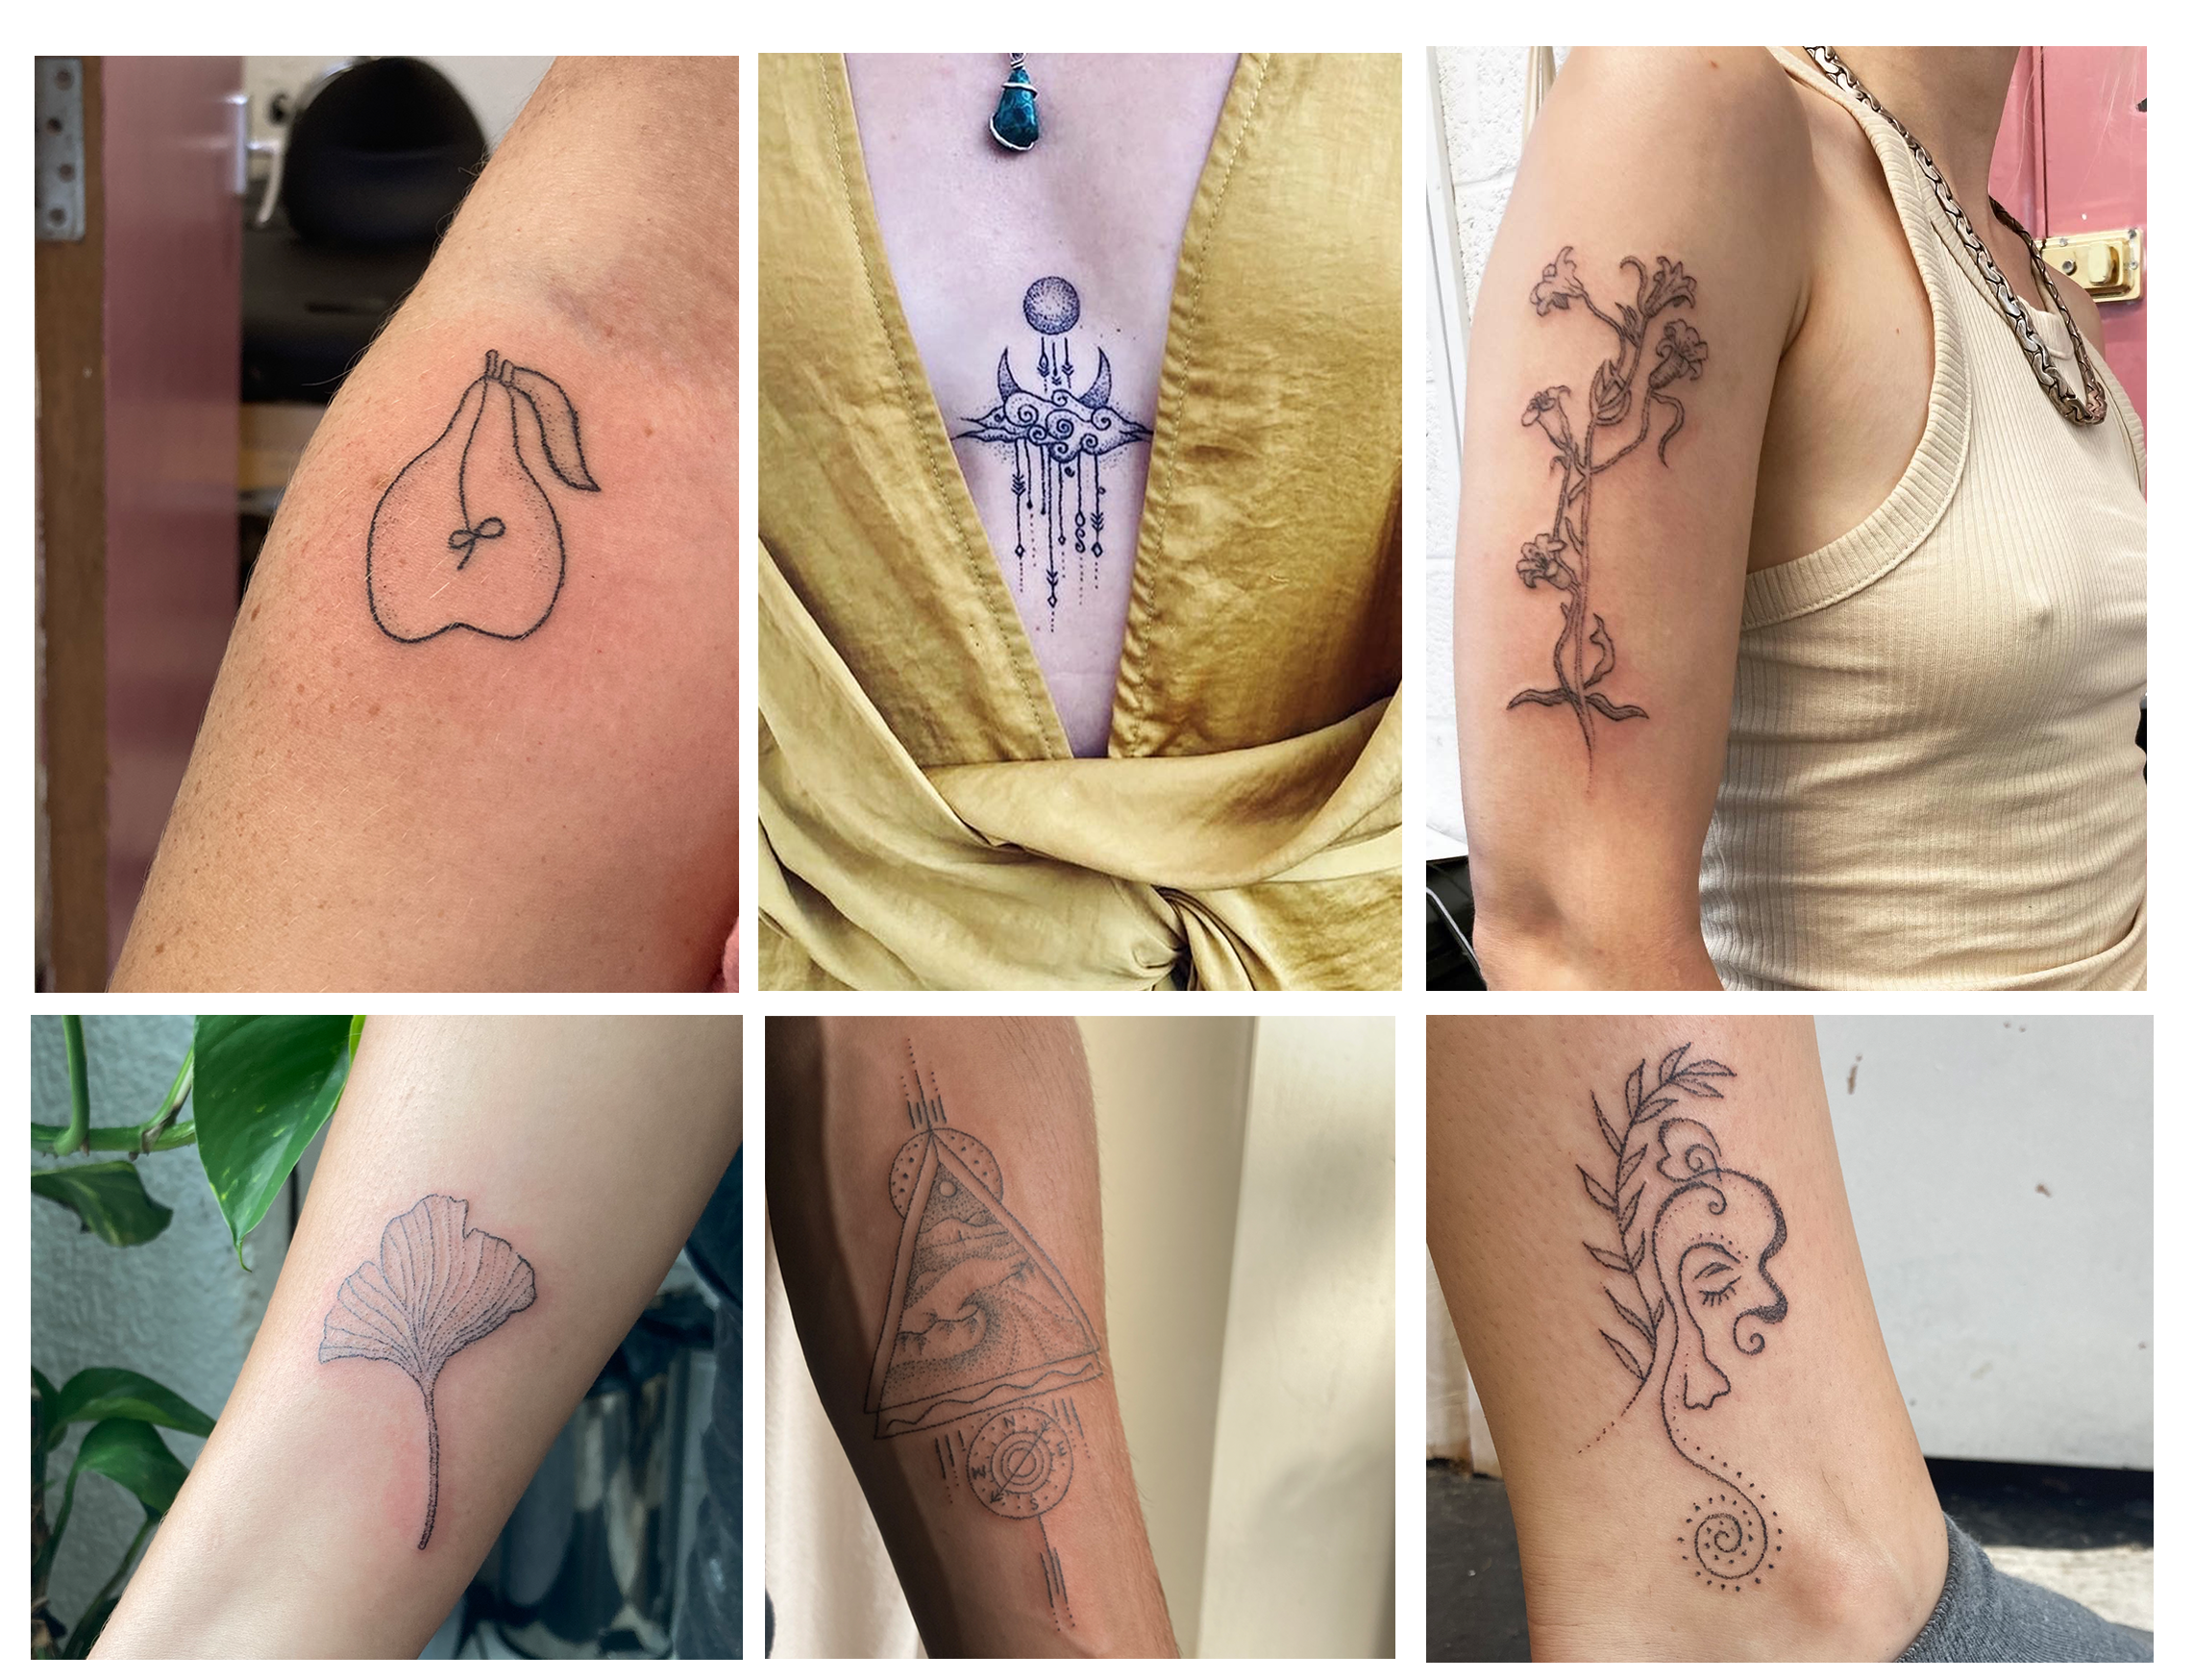 Tattoo Ideas - Beauty Photos, Trends & News | Allure